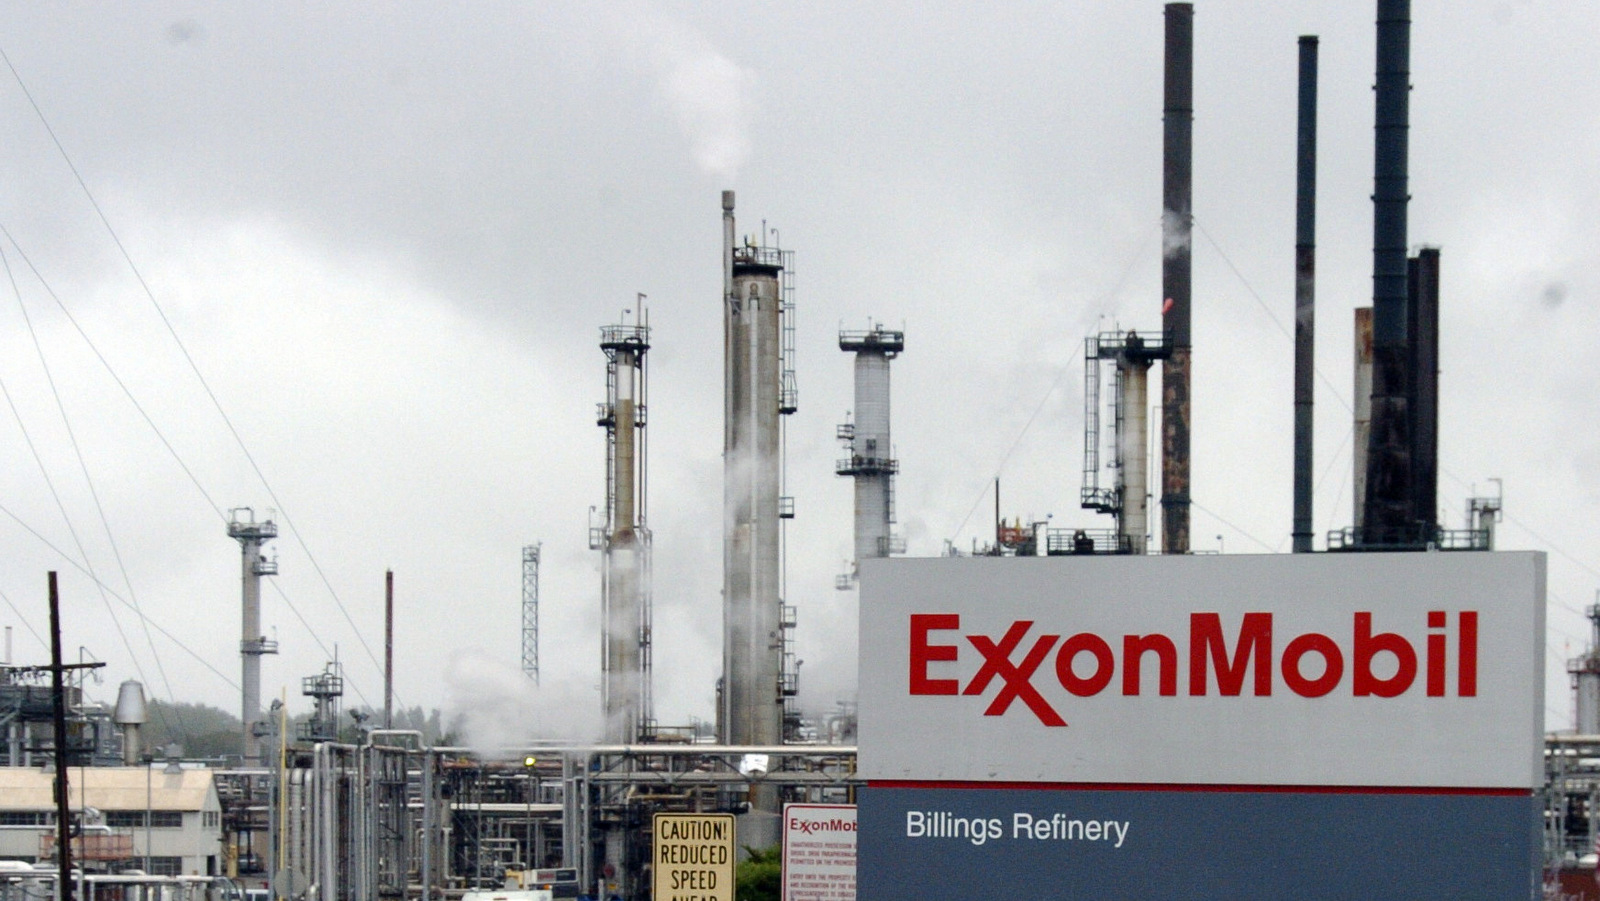 Exxon Mobil's Billings Refinery in Billings, Mont. (AP/Matthew Brown)